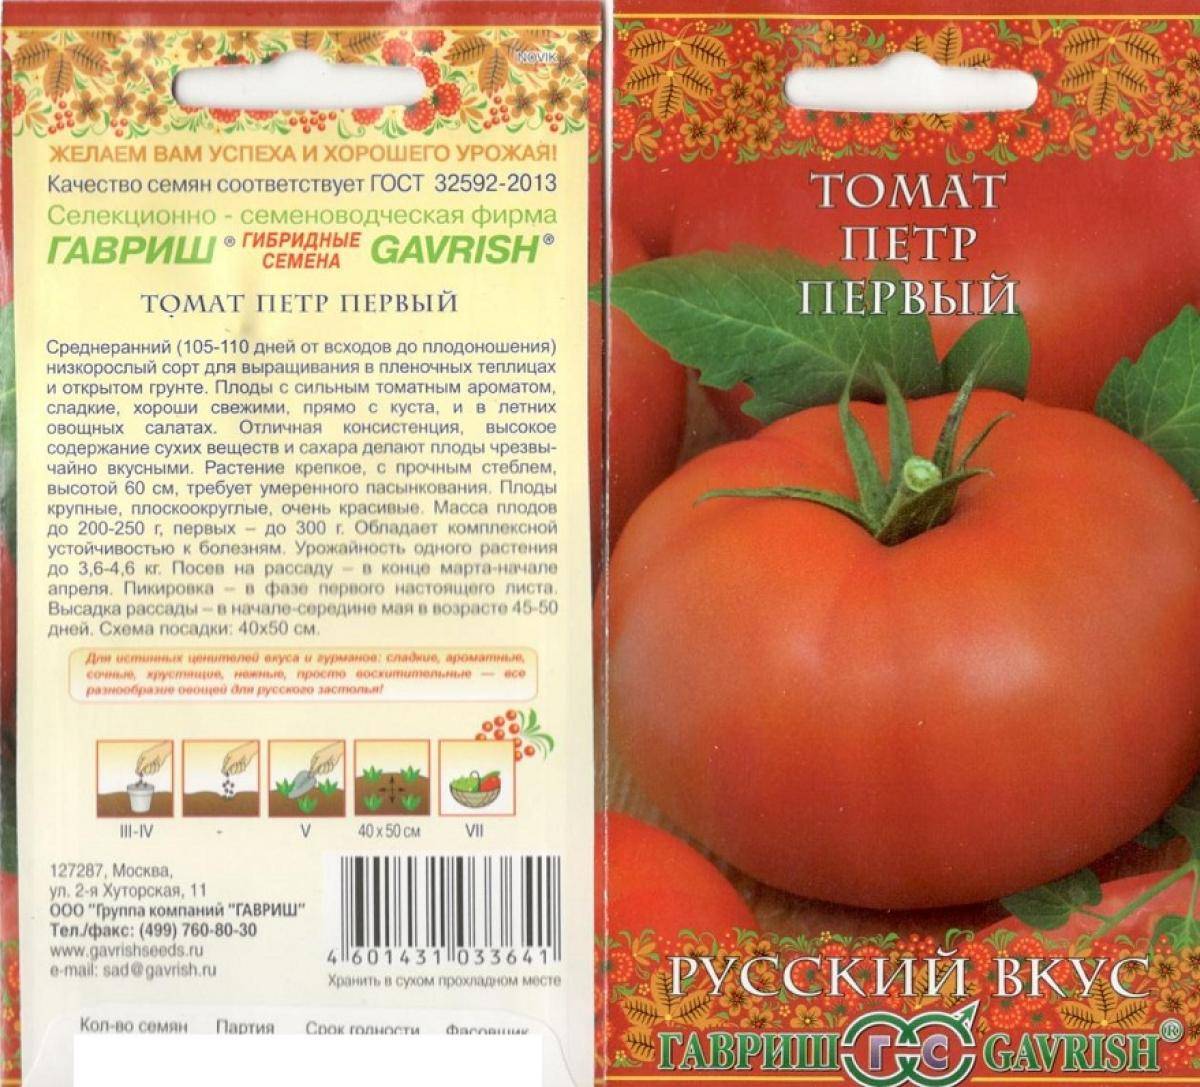 Томат «паленка f1»: характеристика и описание гибрида помидор с фото, отзывы об урожайности